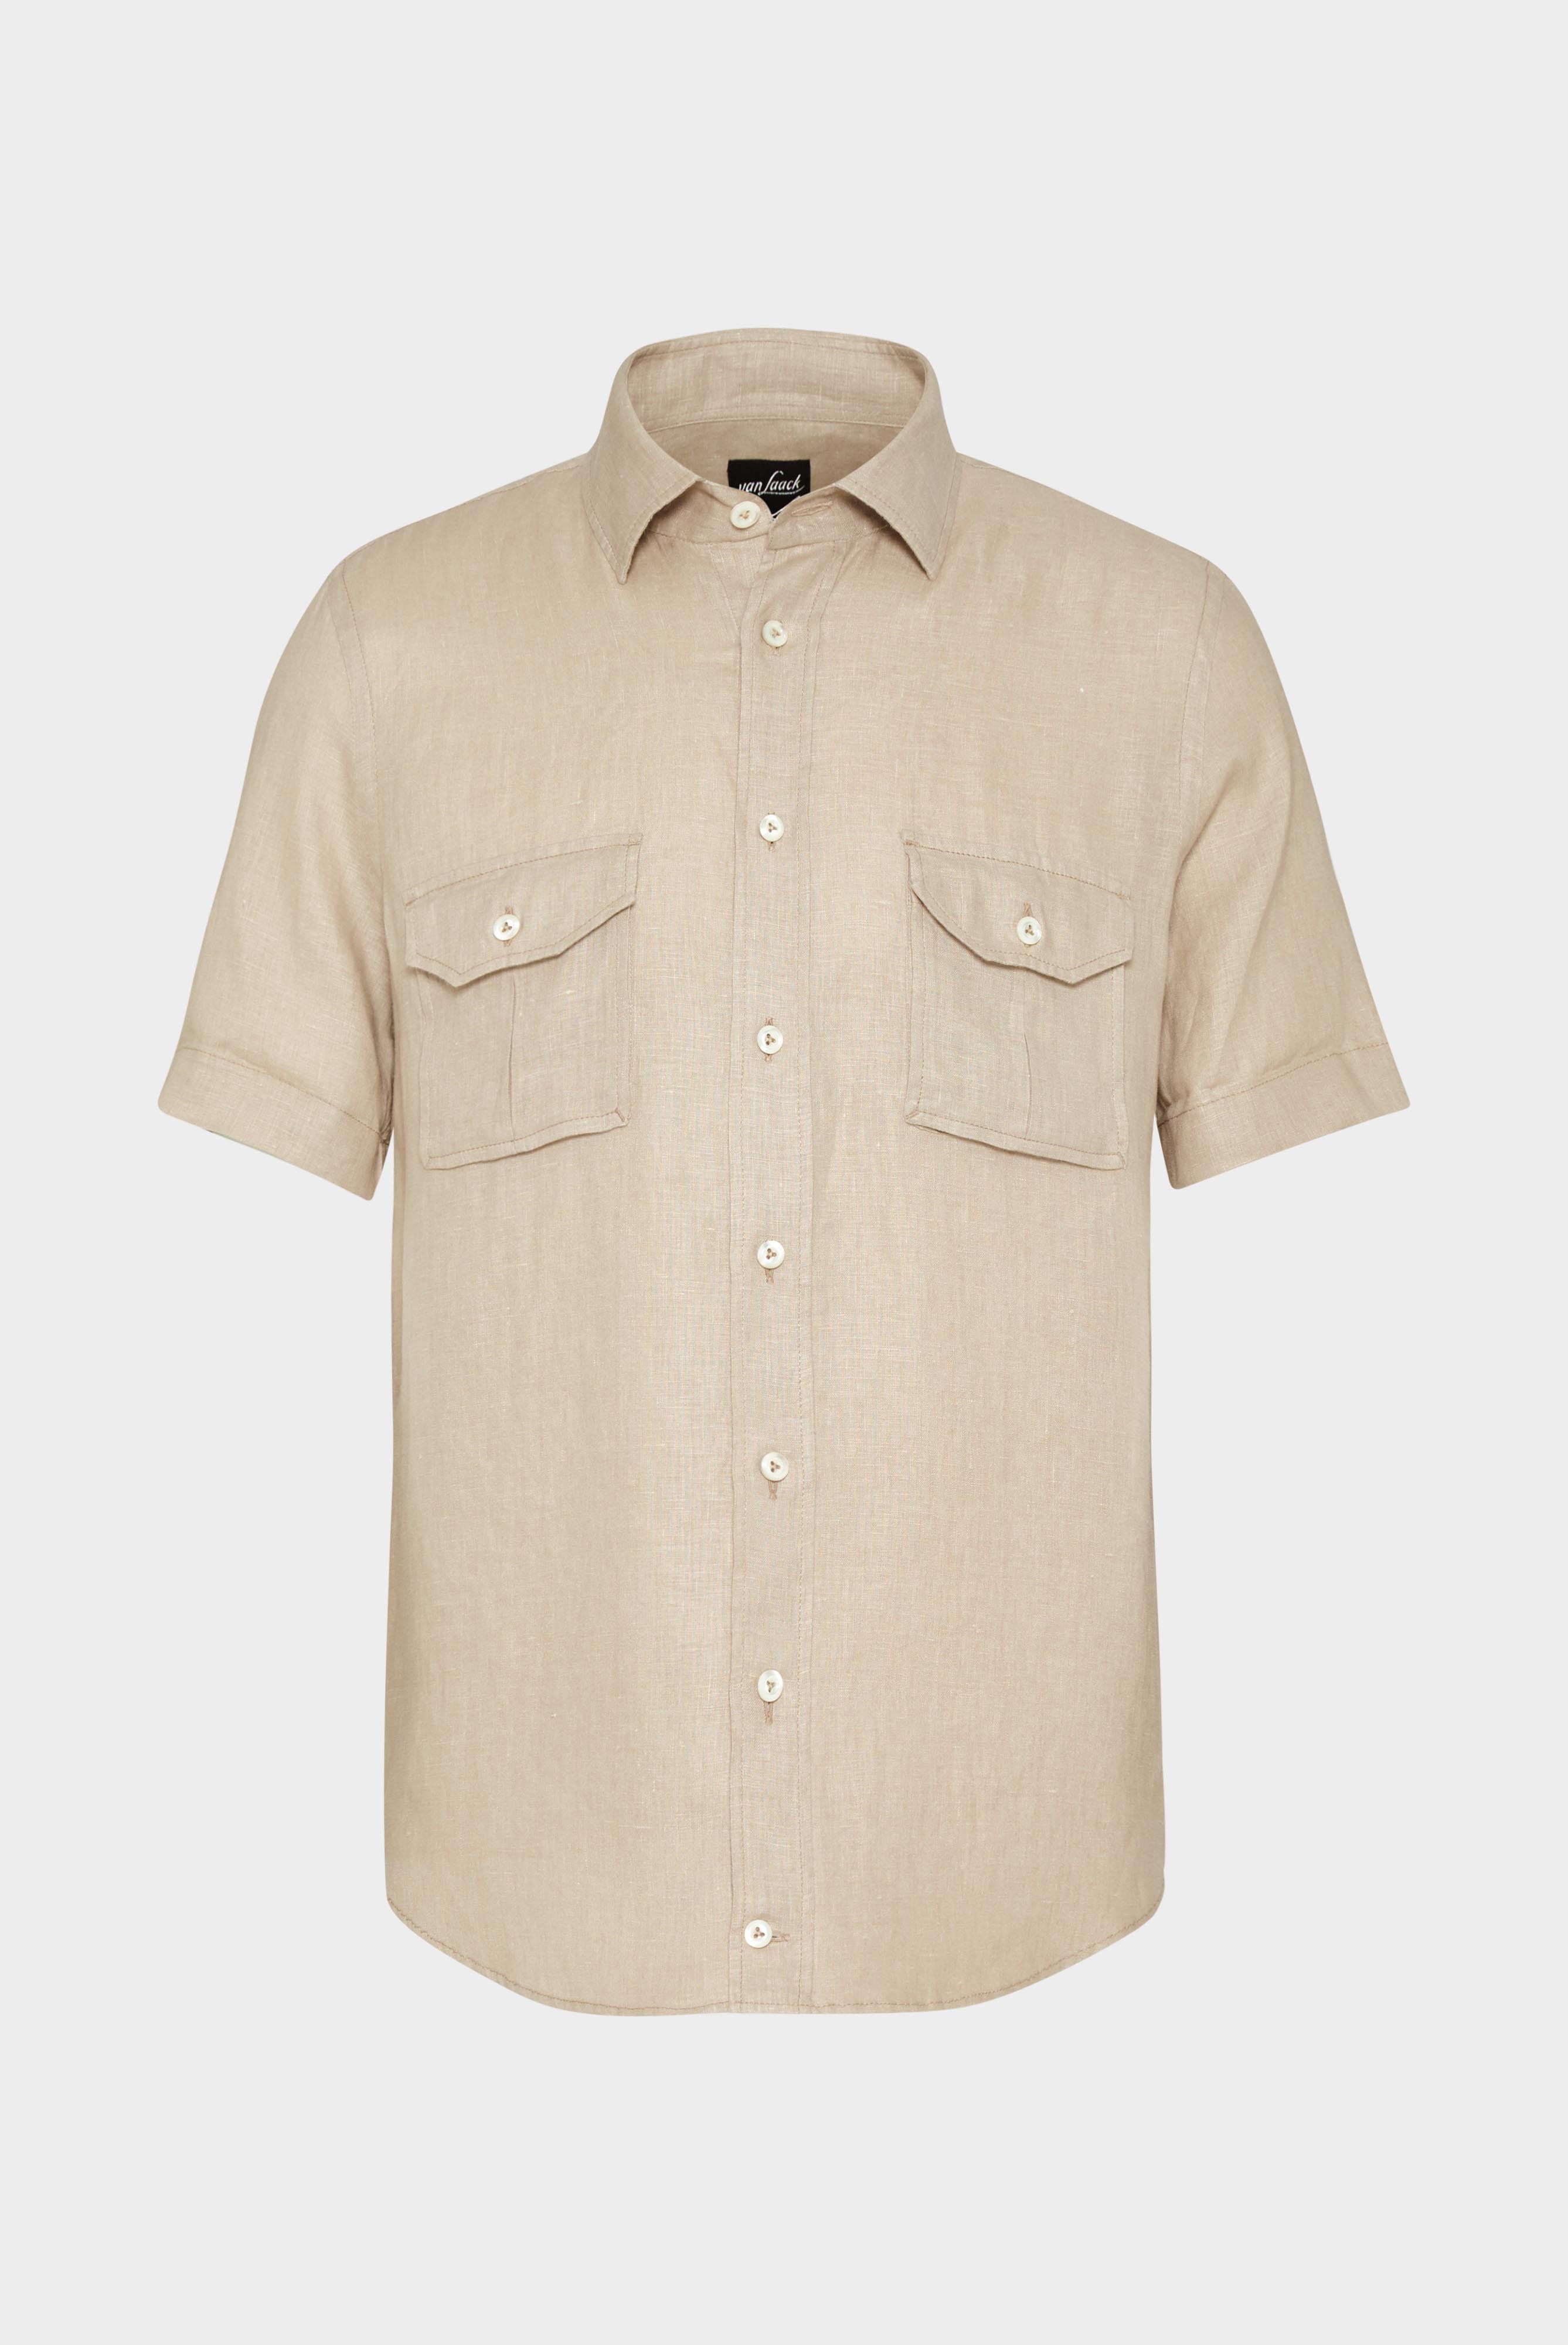 Short sleeve shirts+Super soft short-sleeved linen shirt in a boxy fit+20.2035.P8.150555.130.38